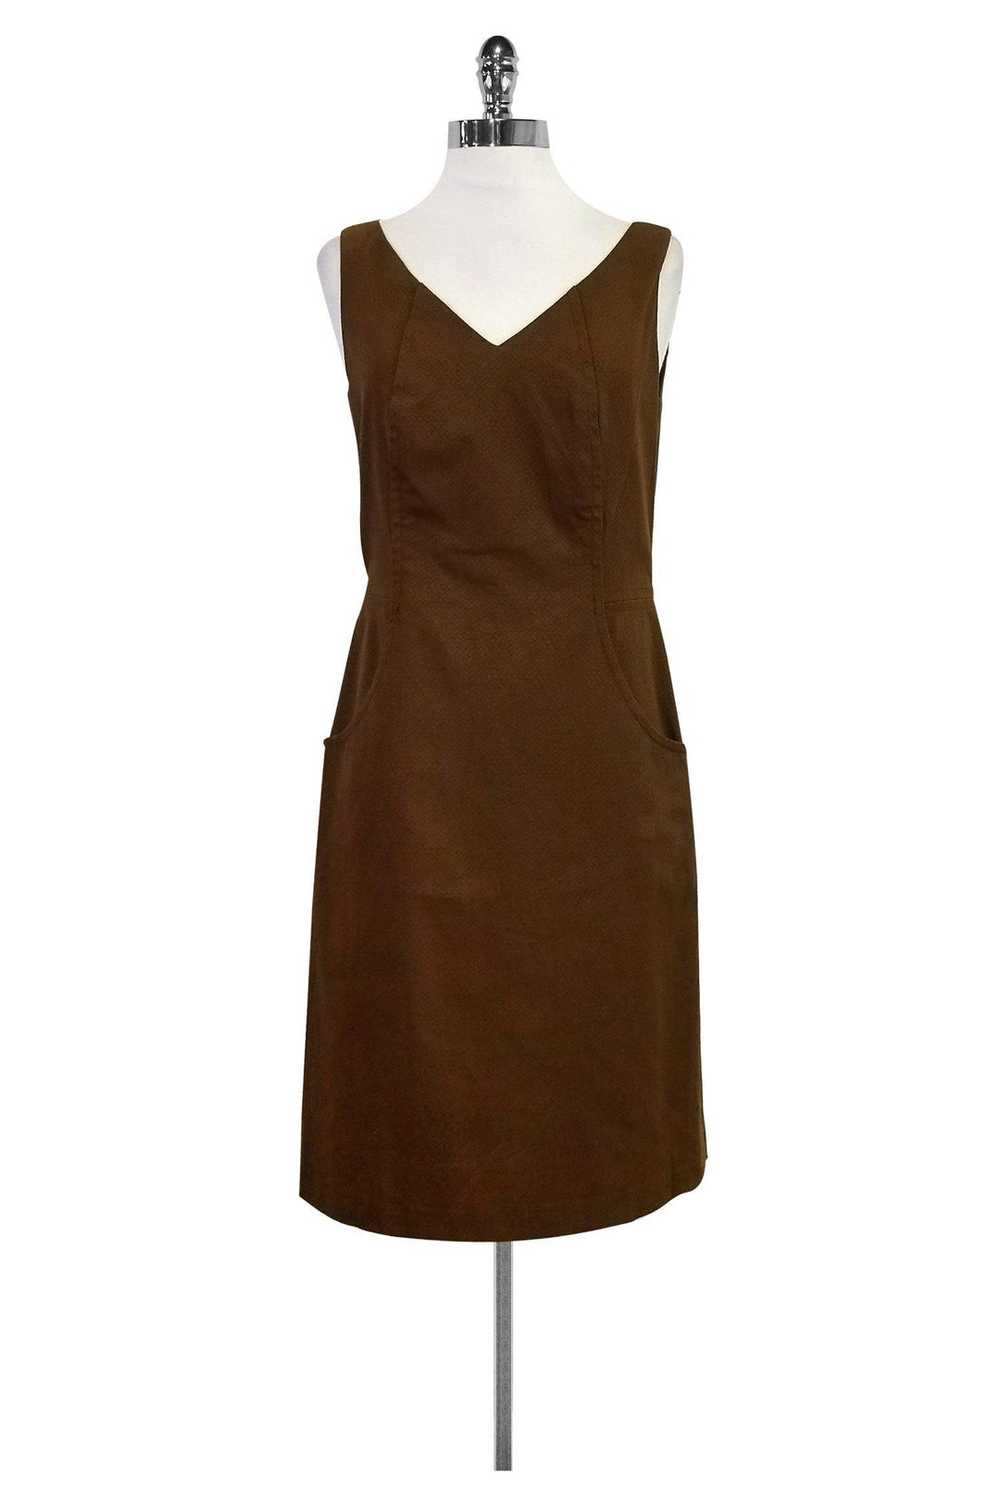 Lafayette 148 - Brown Patterned Dress Sz 2 - image 1